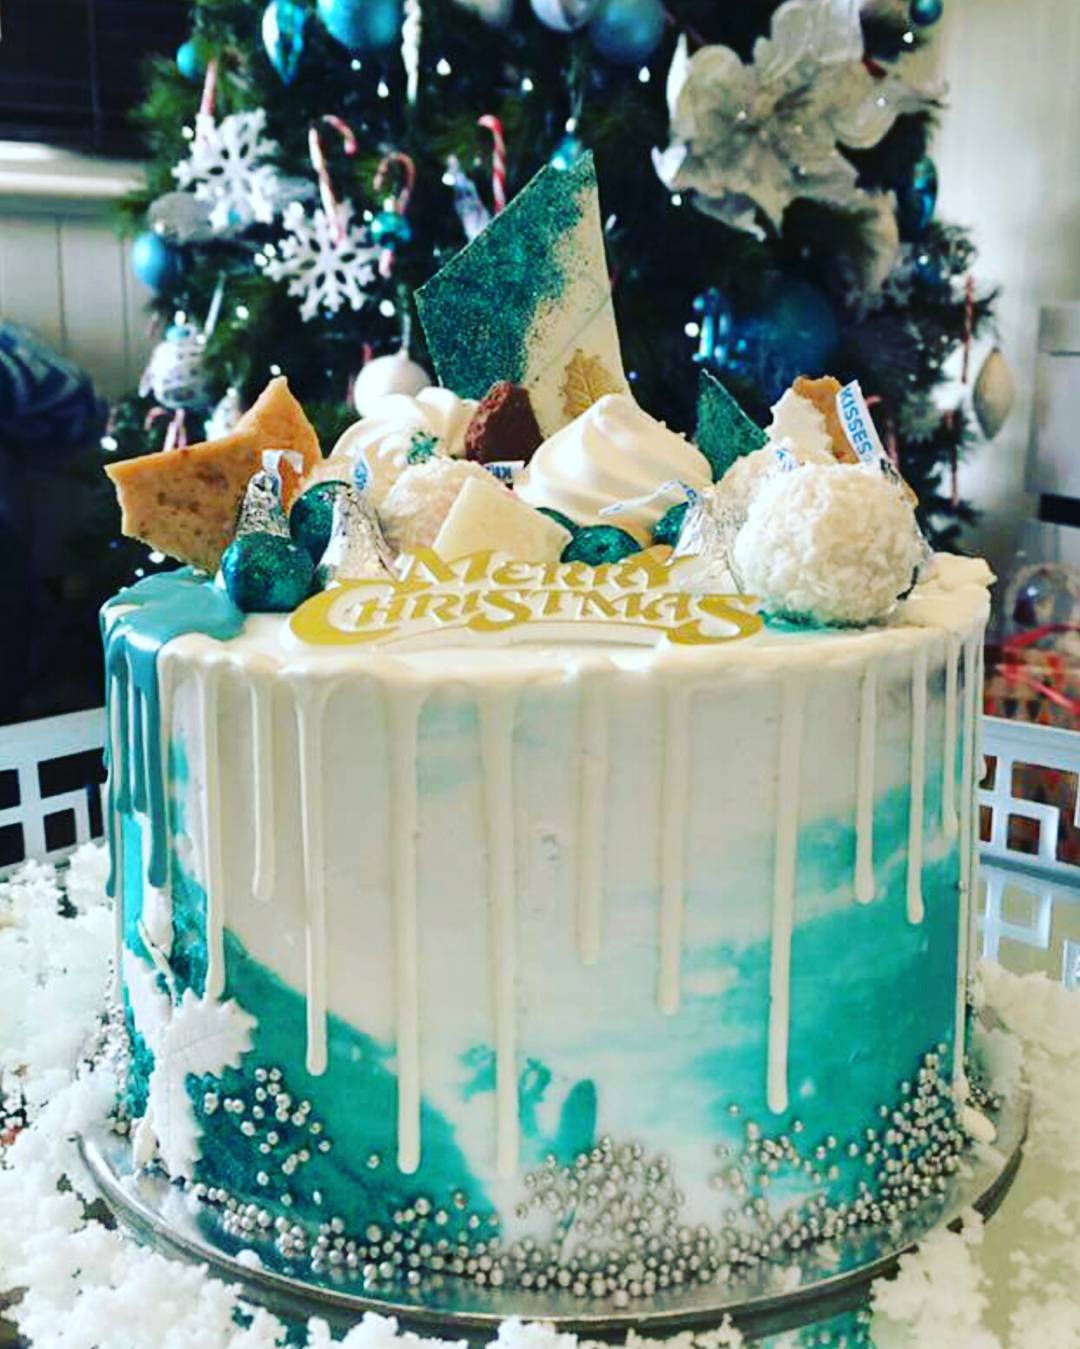 CHRISTMAS DRIPCAKES...#buttercreamcake #christmascakes #chocolatedripcake #specialoccasioncakes #gourmet